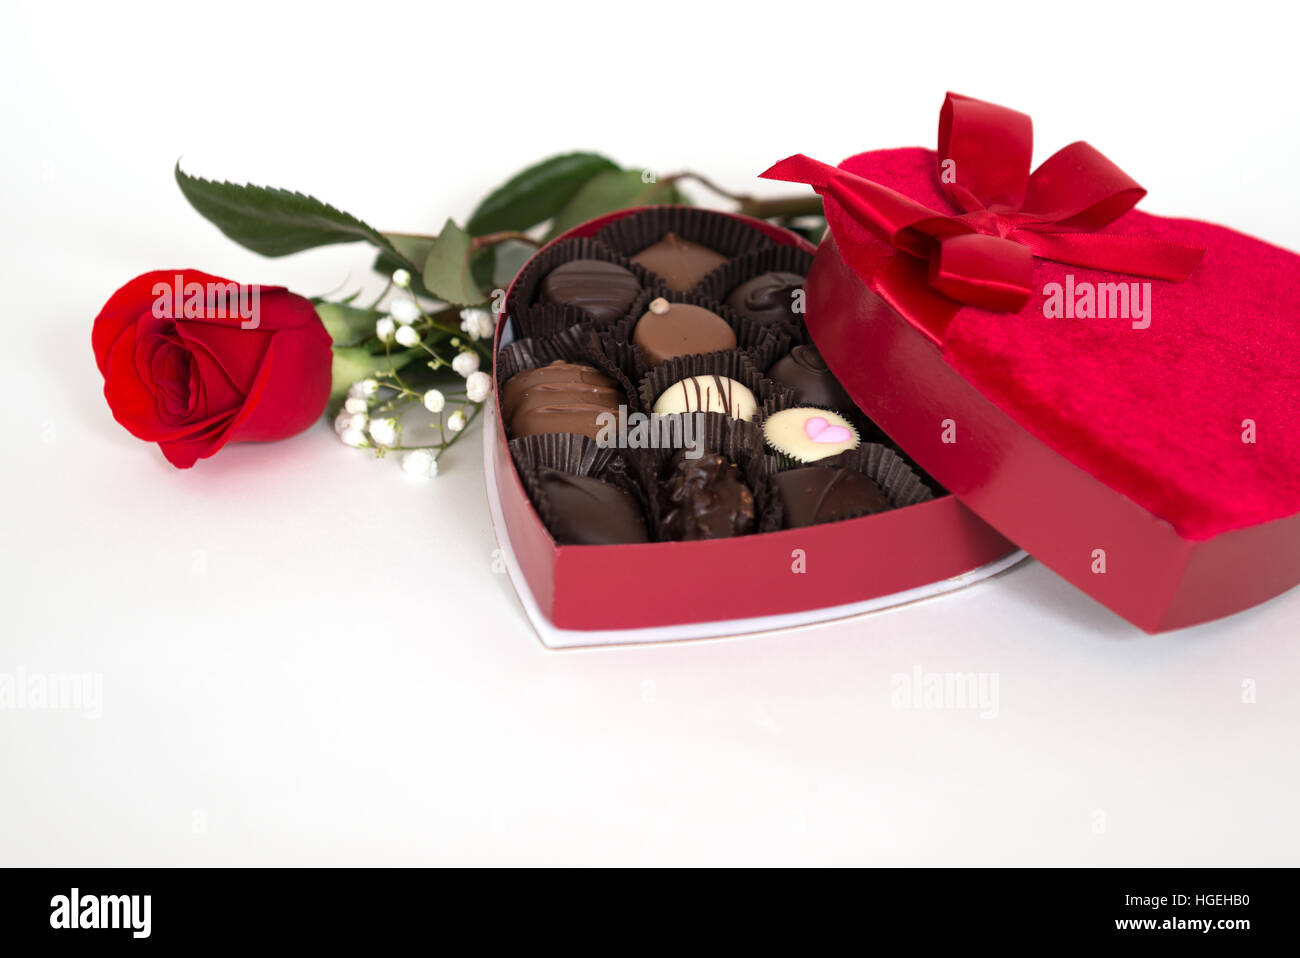 Large Heart-Shaped Chocolate Box - Alamo City Chocolate Factory